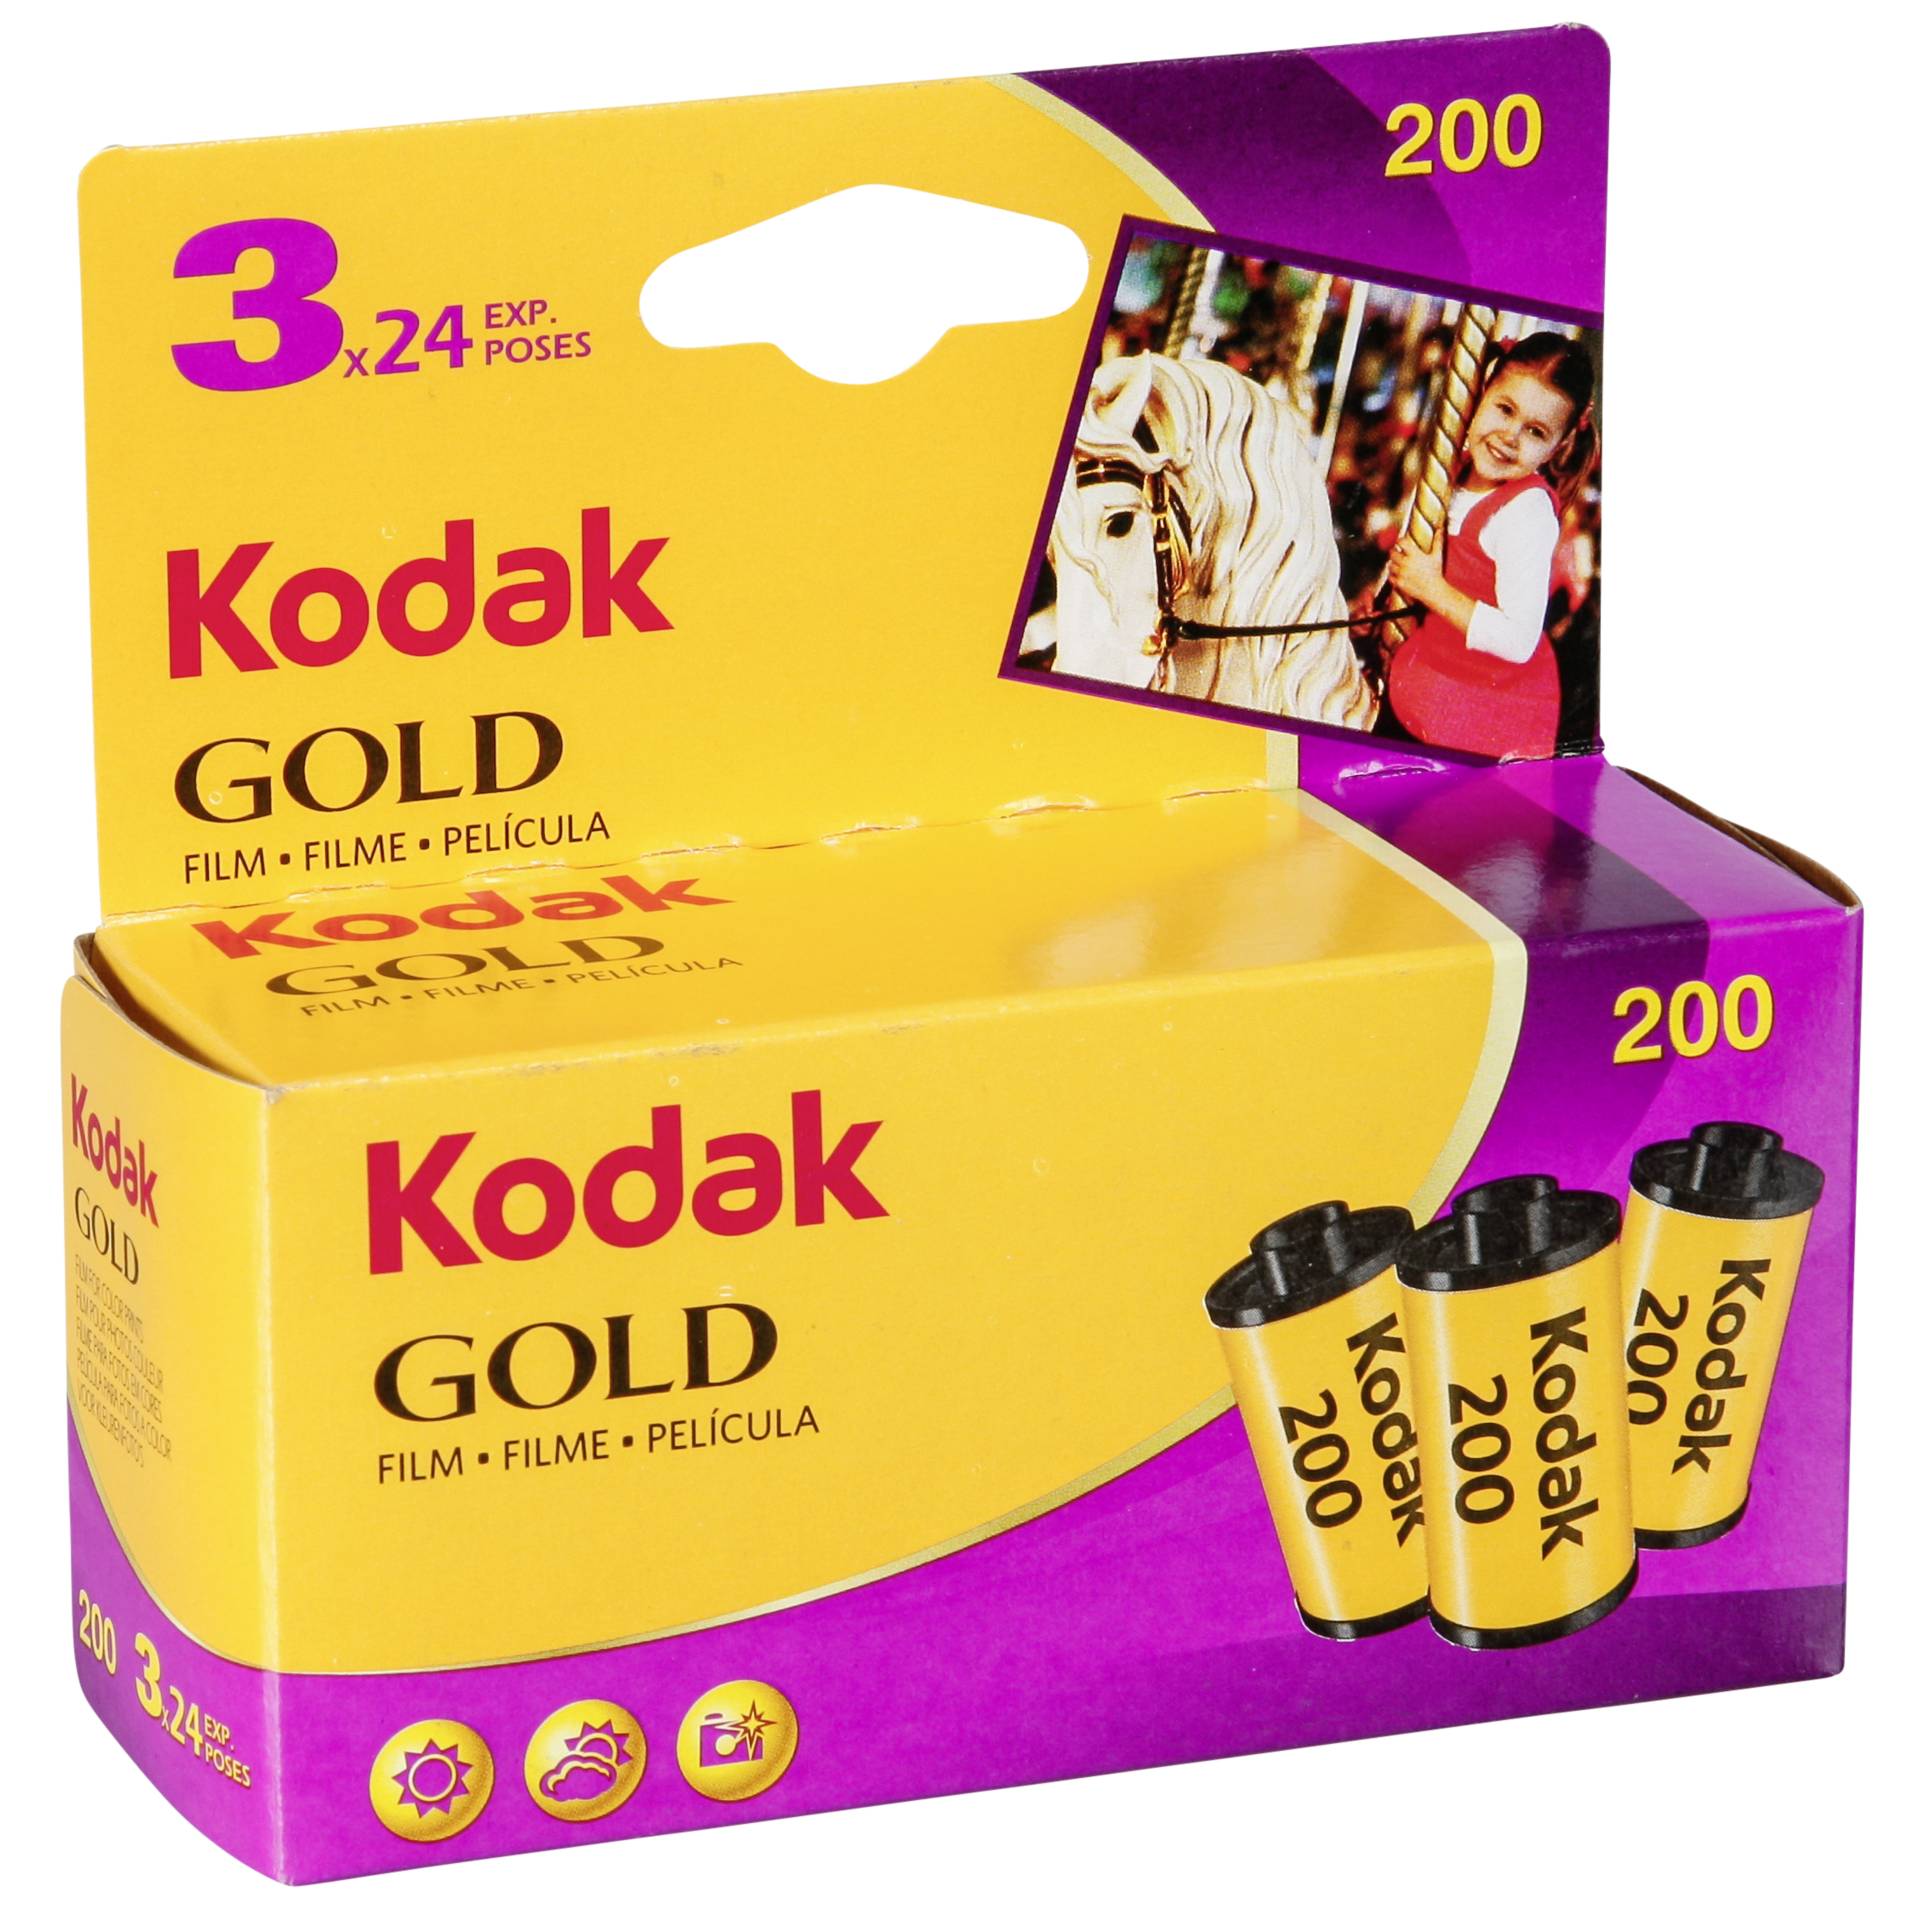 1x3 Kodak oro 200 135/24* - Kodak - Autoscatto Store